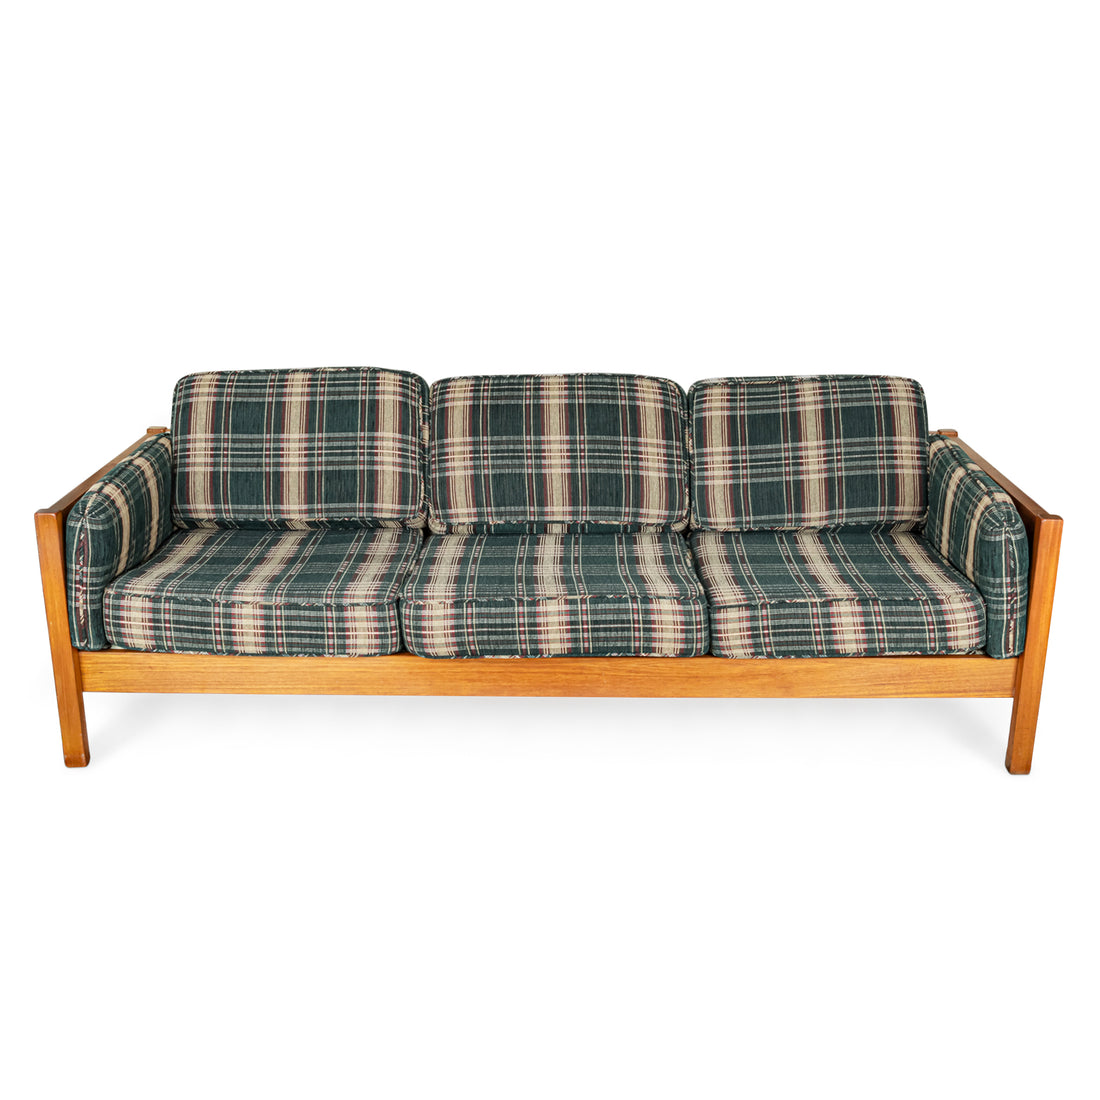 Vintage Teak Sofa with Green Plaid Upholstery